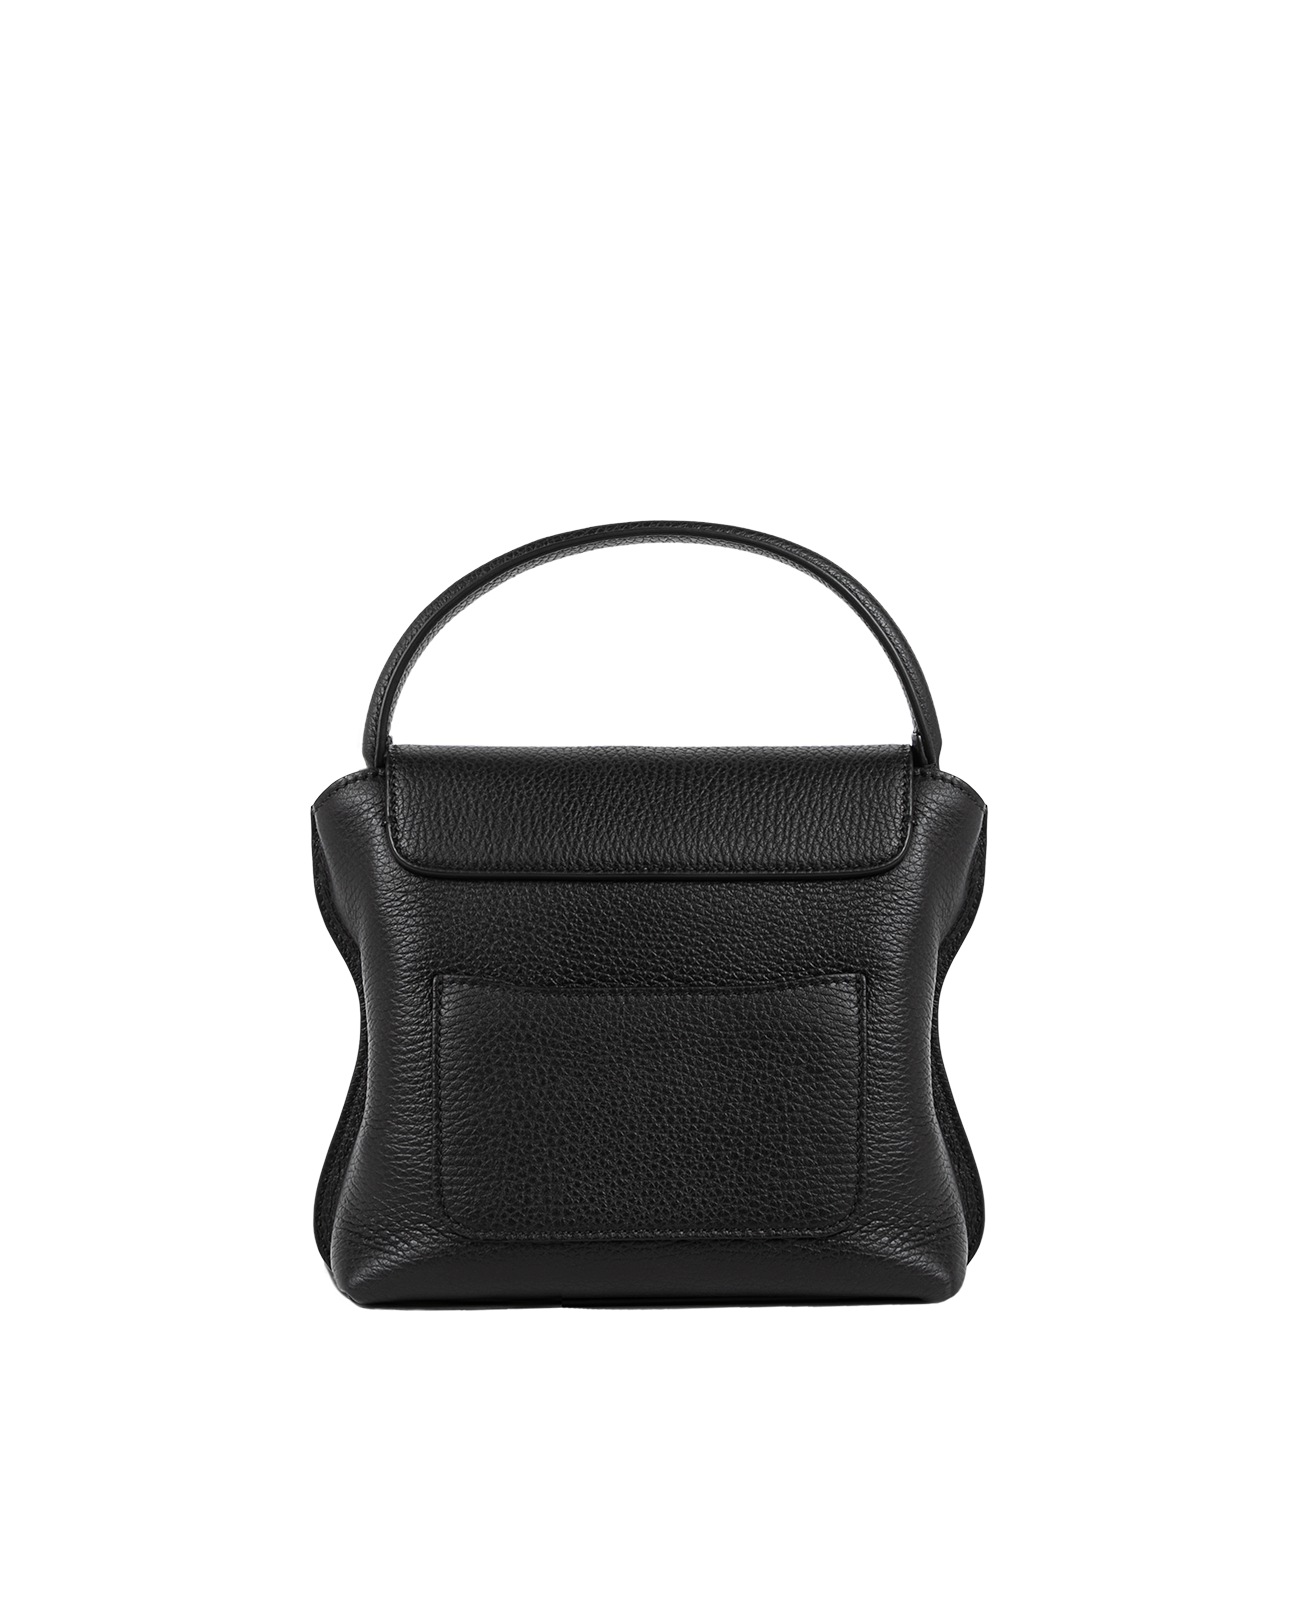 Ambra | Italian Leather Bag | AMA Bags – AMA Official Store